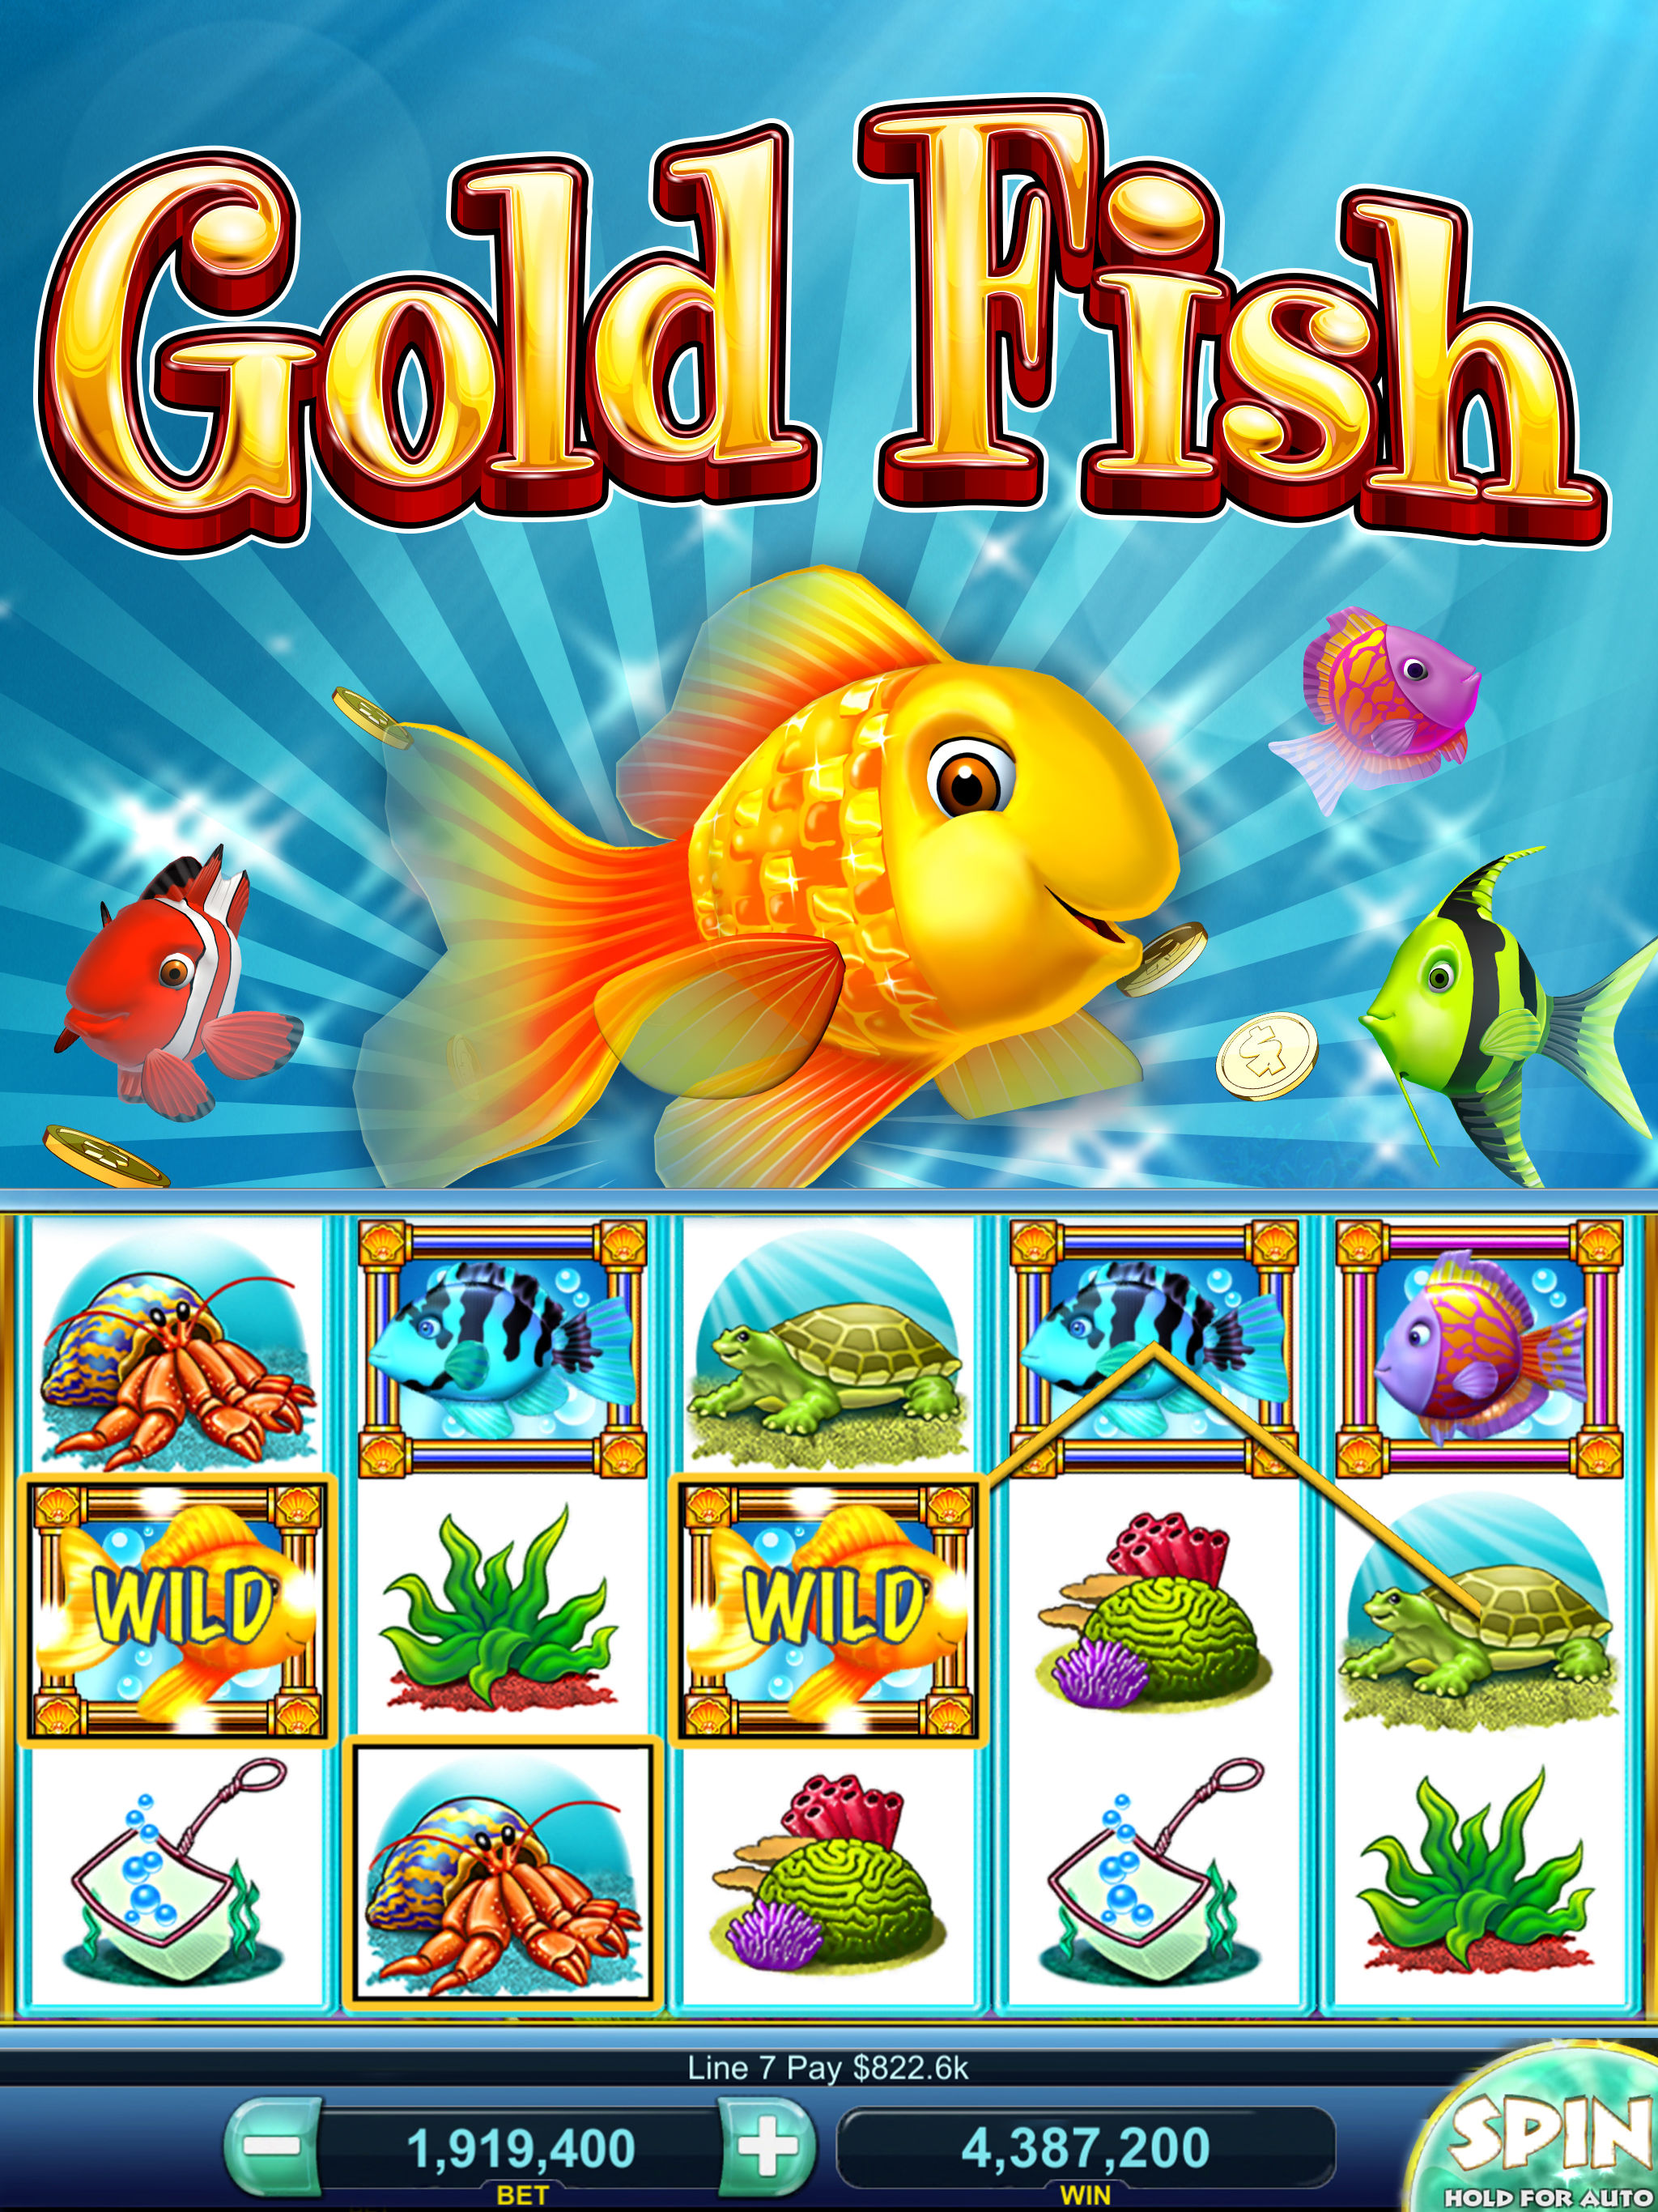 Gold fish casino slots games